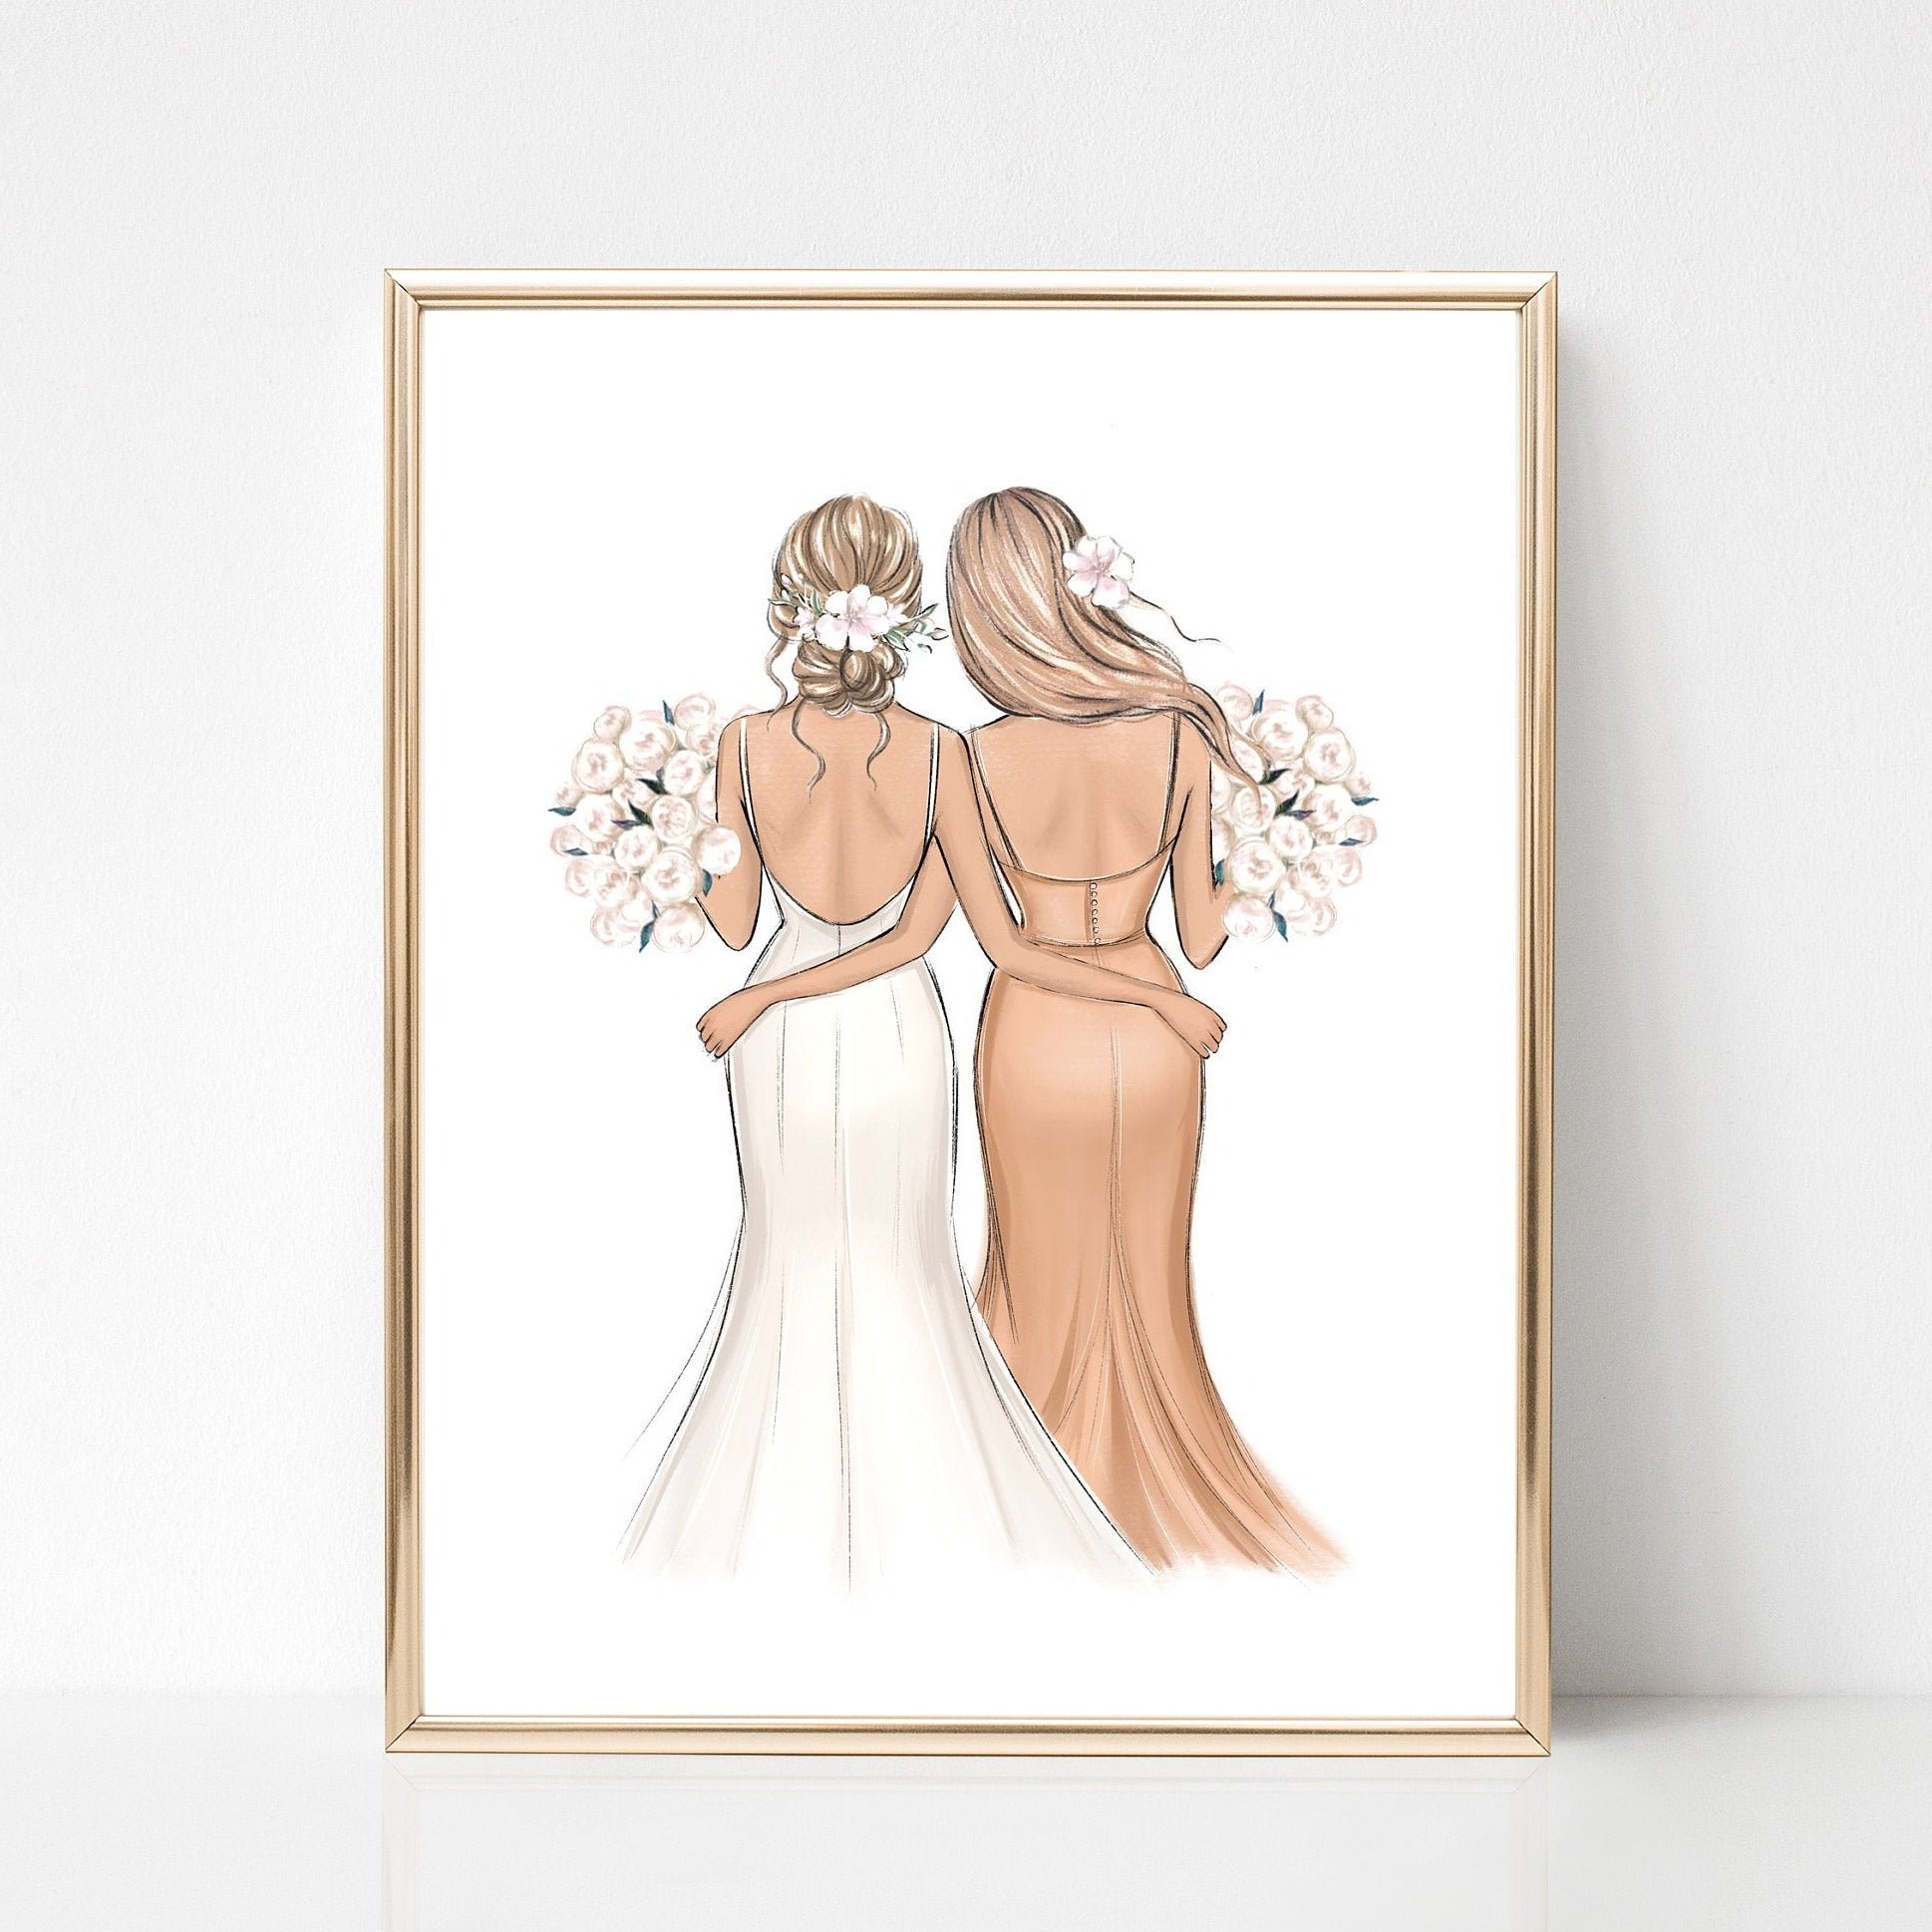 Personalized bride and bridesmaid art print. Custom wedding illustration